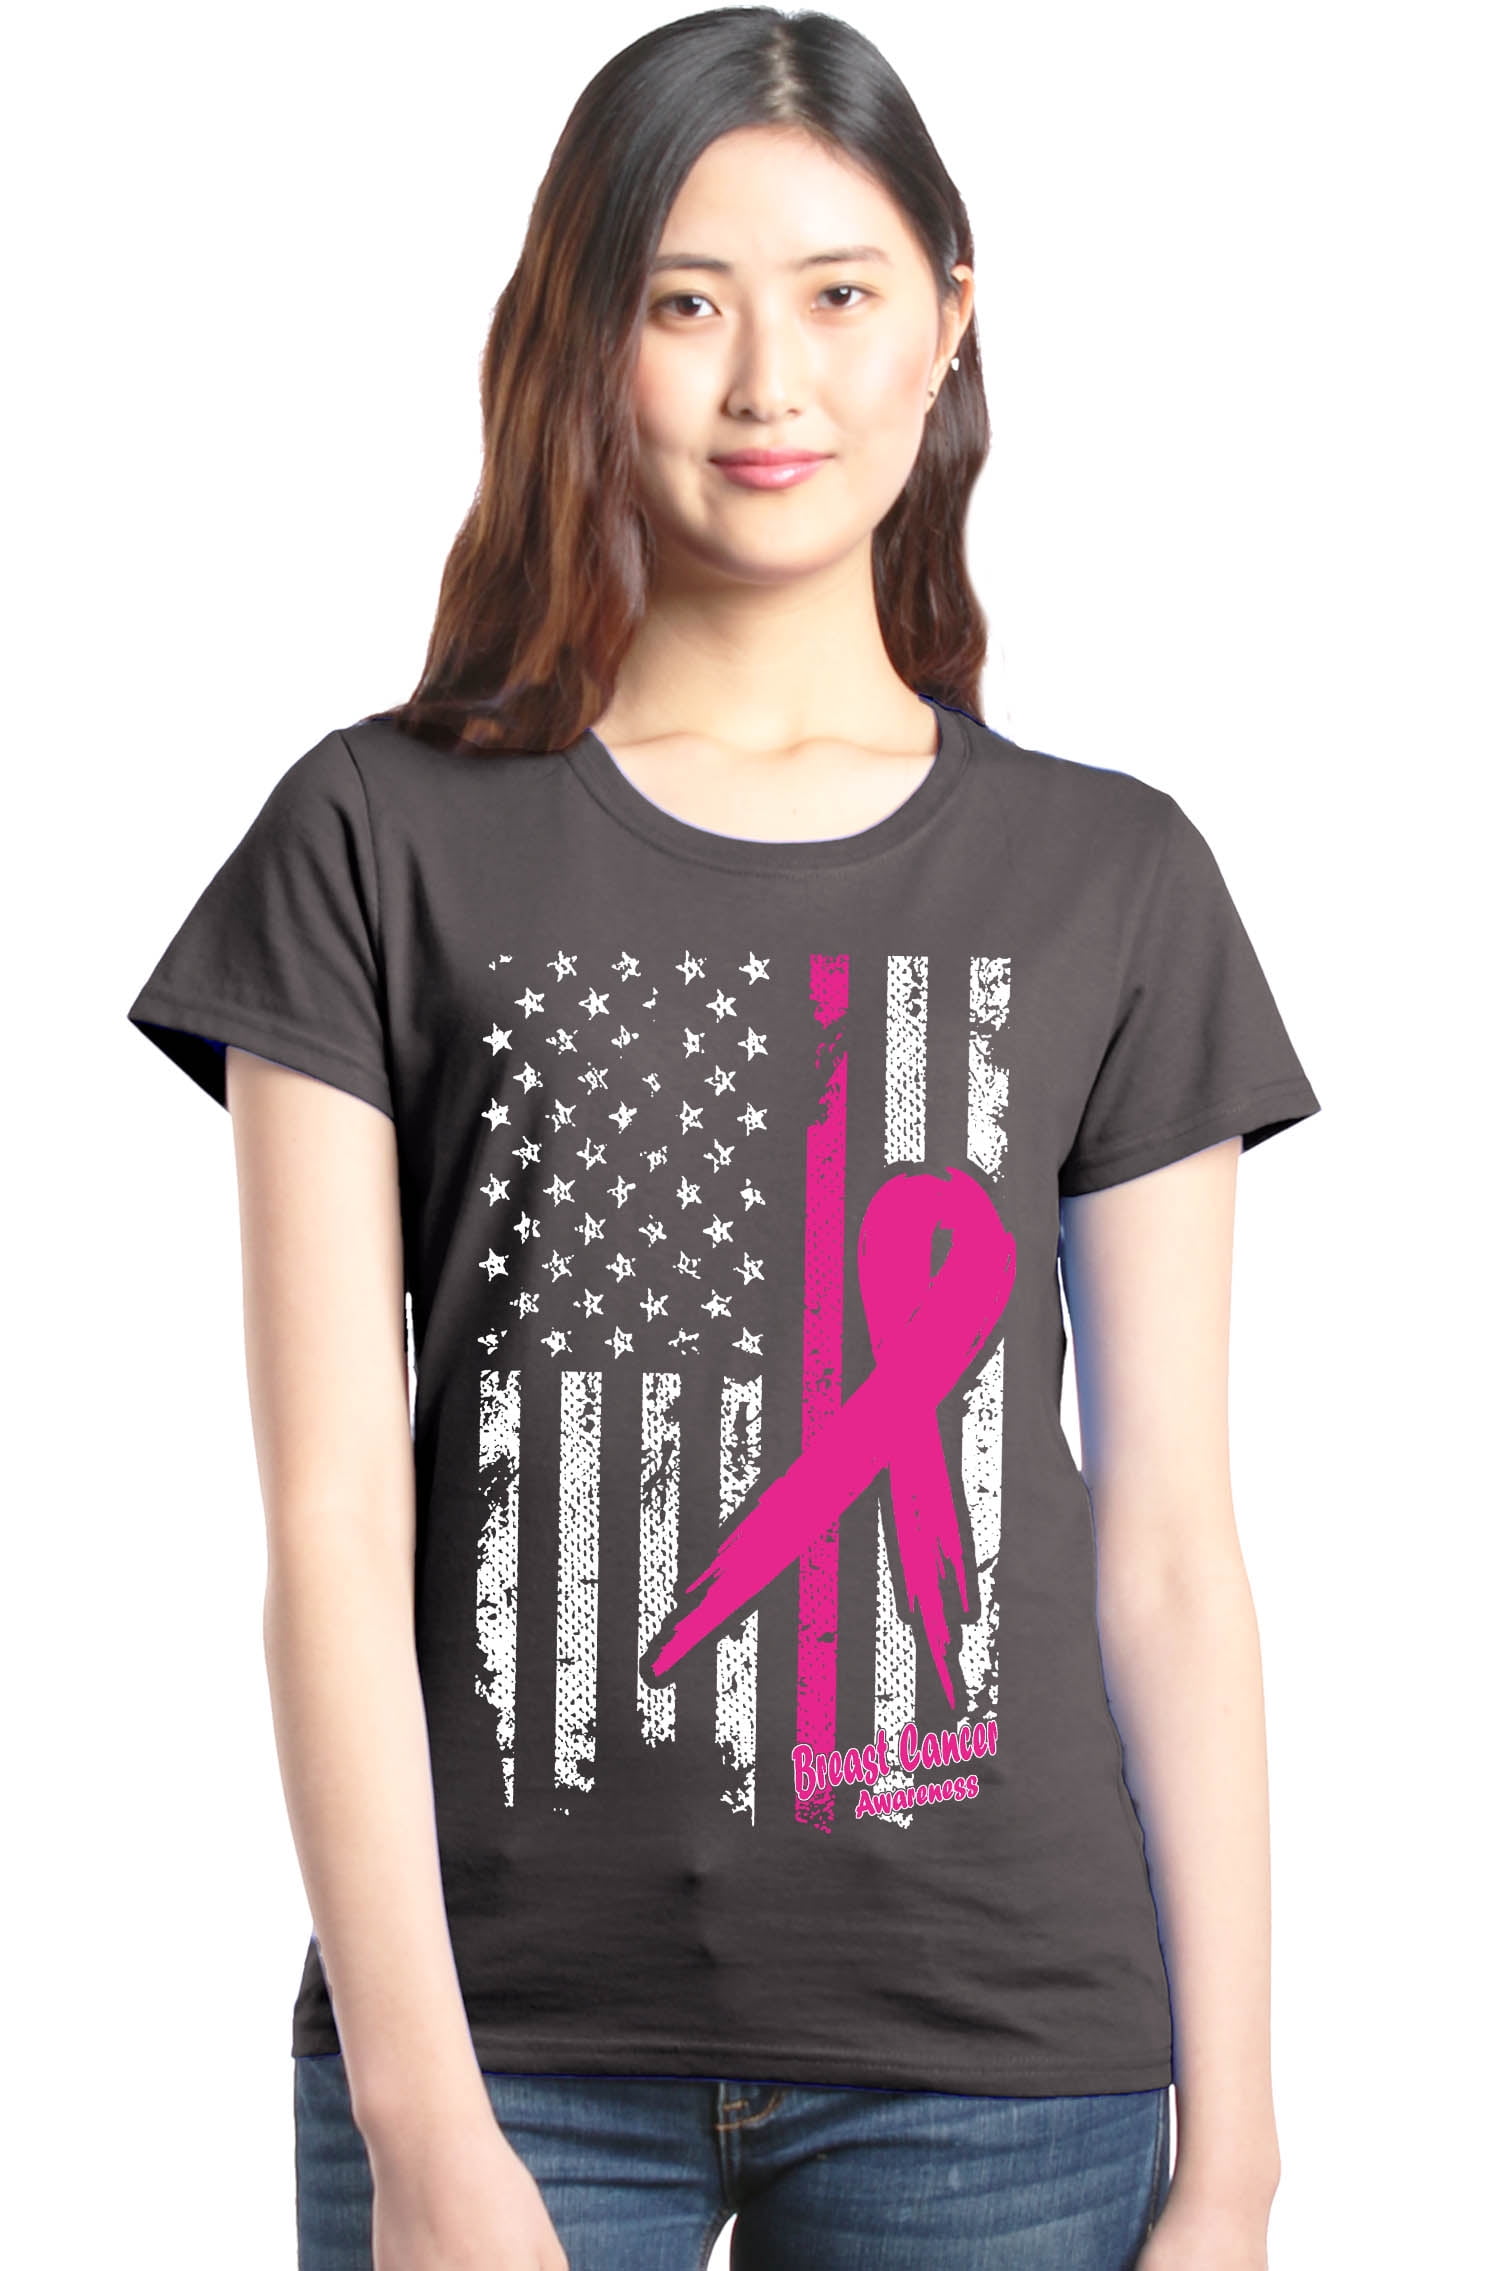 Save a Rack HOODIE SWEAT SHIRT Breast Cancer Awareness Pink Ribbon Redneck BOOBS 